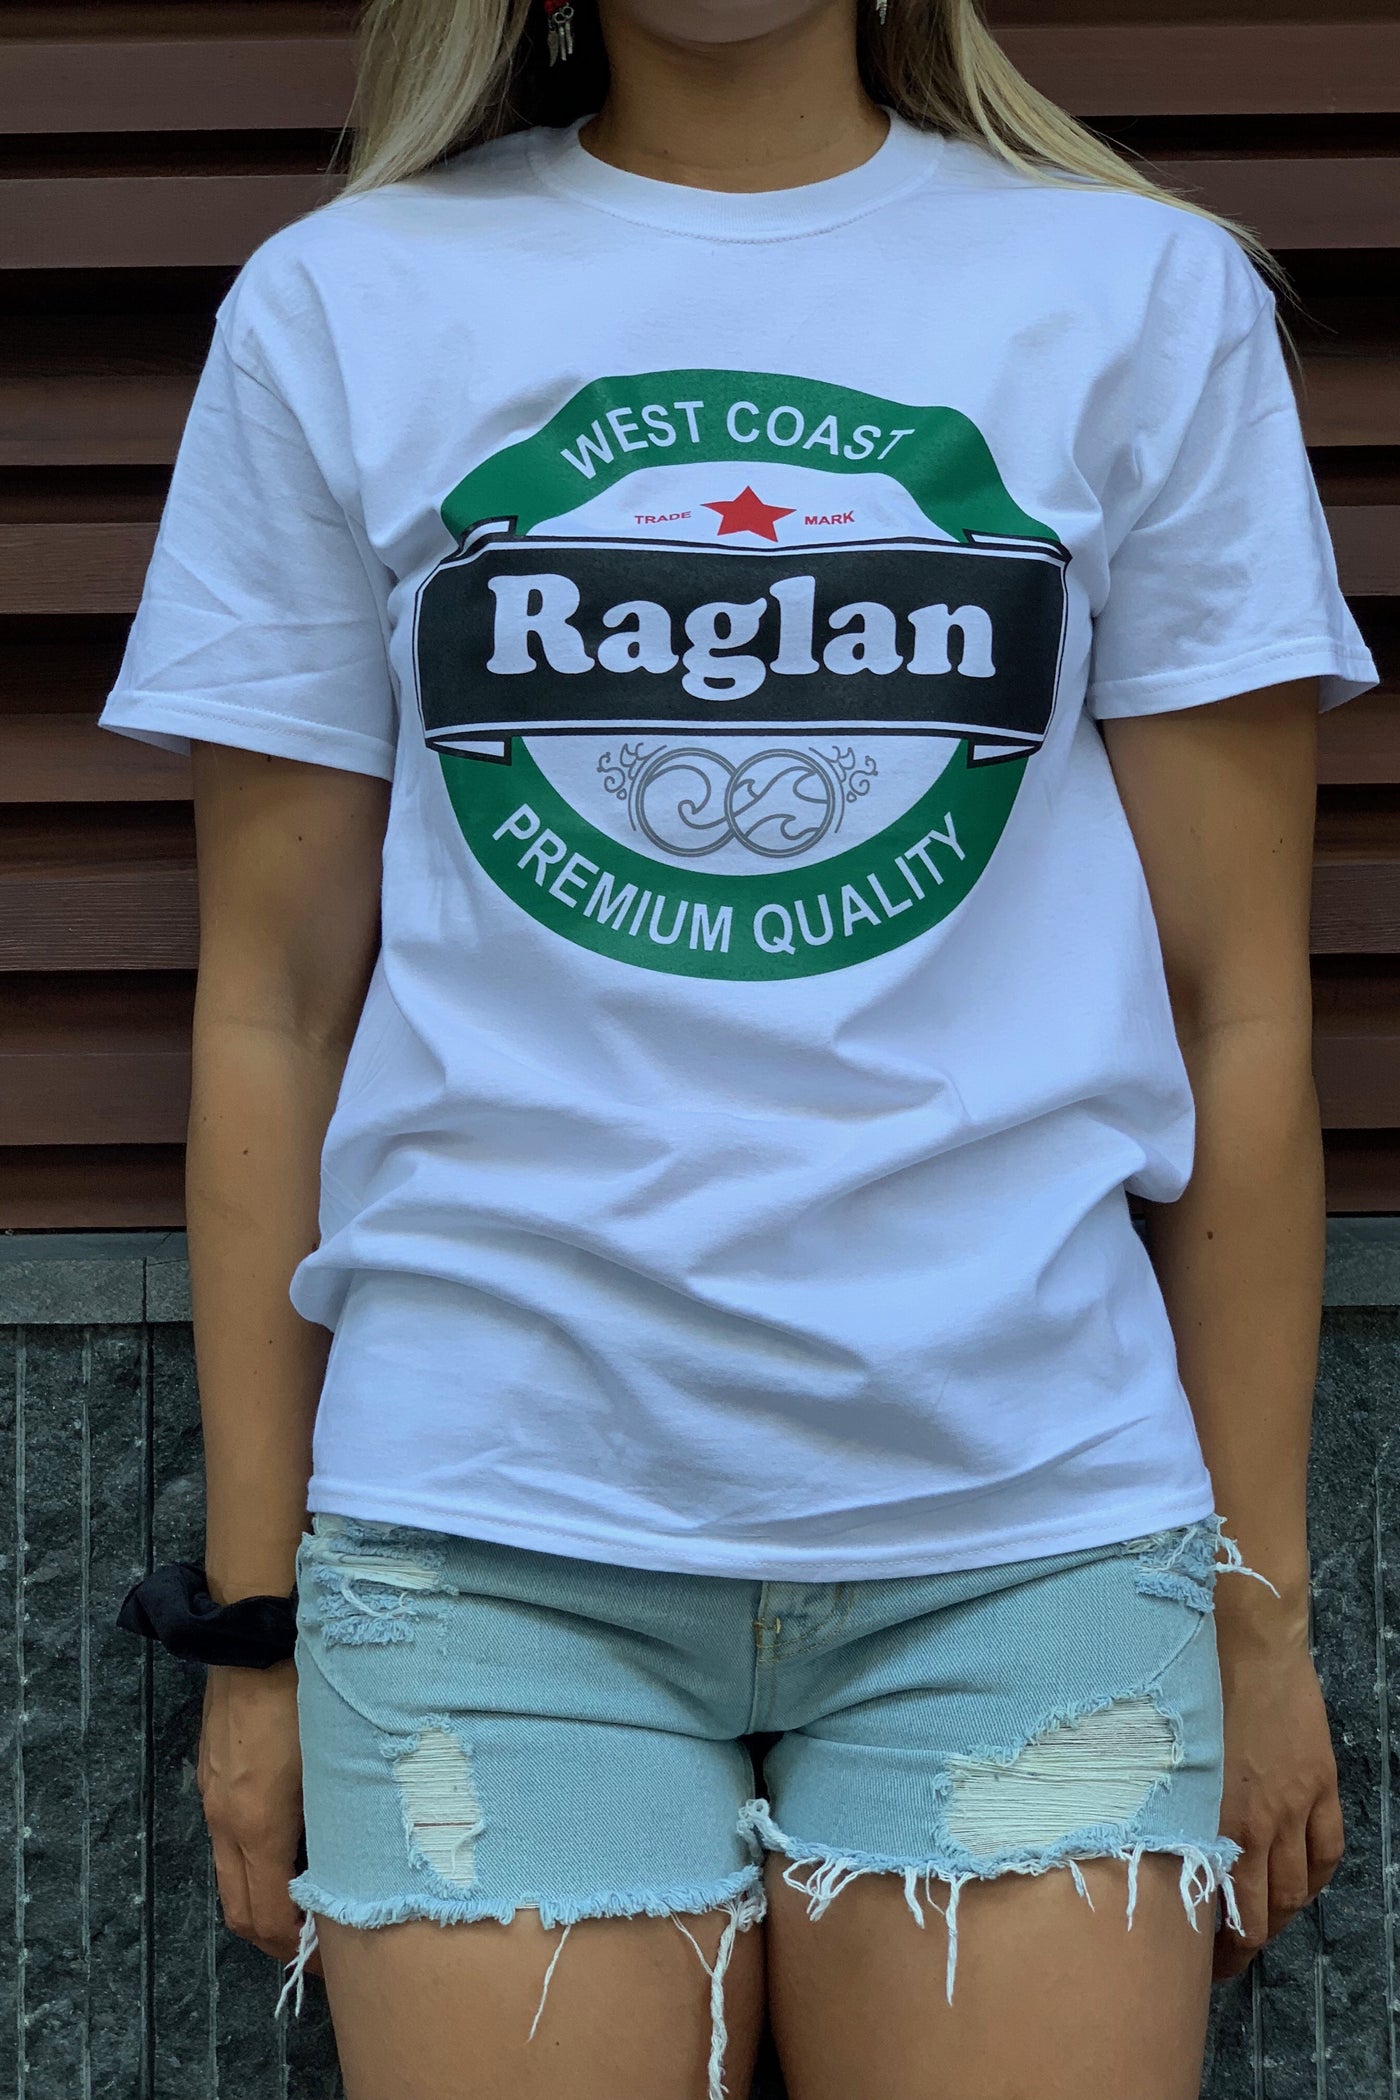 Raglan Premium Quality